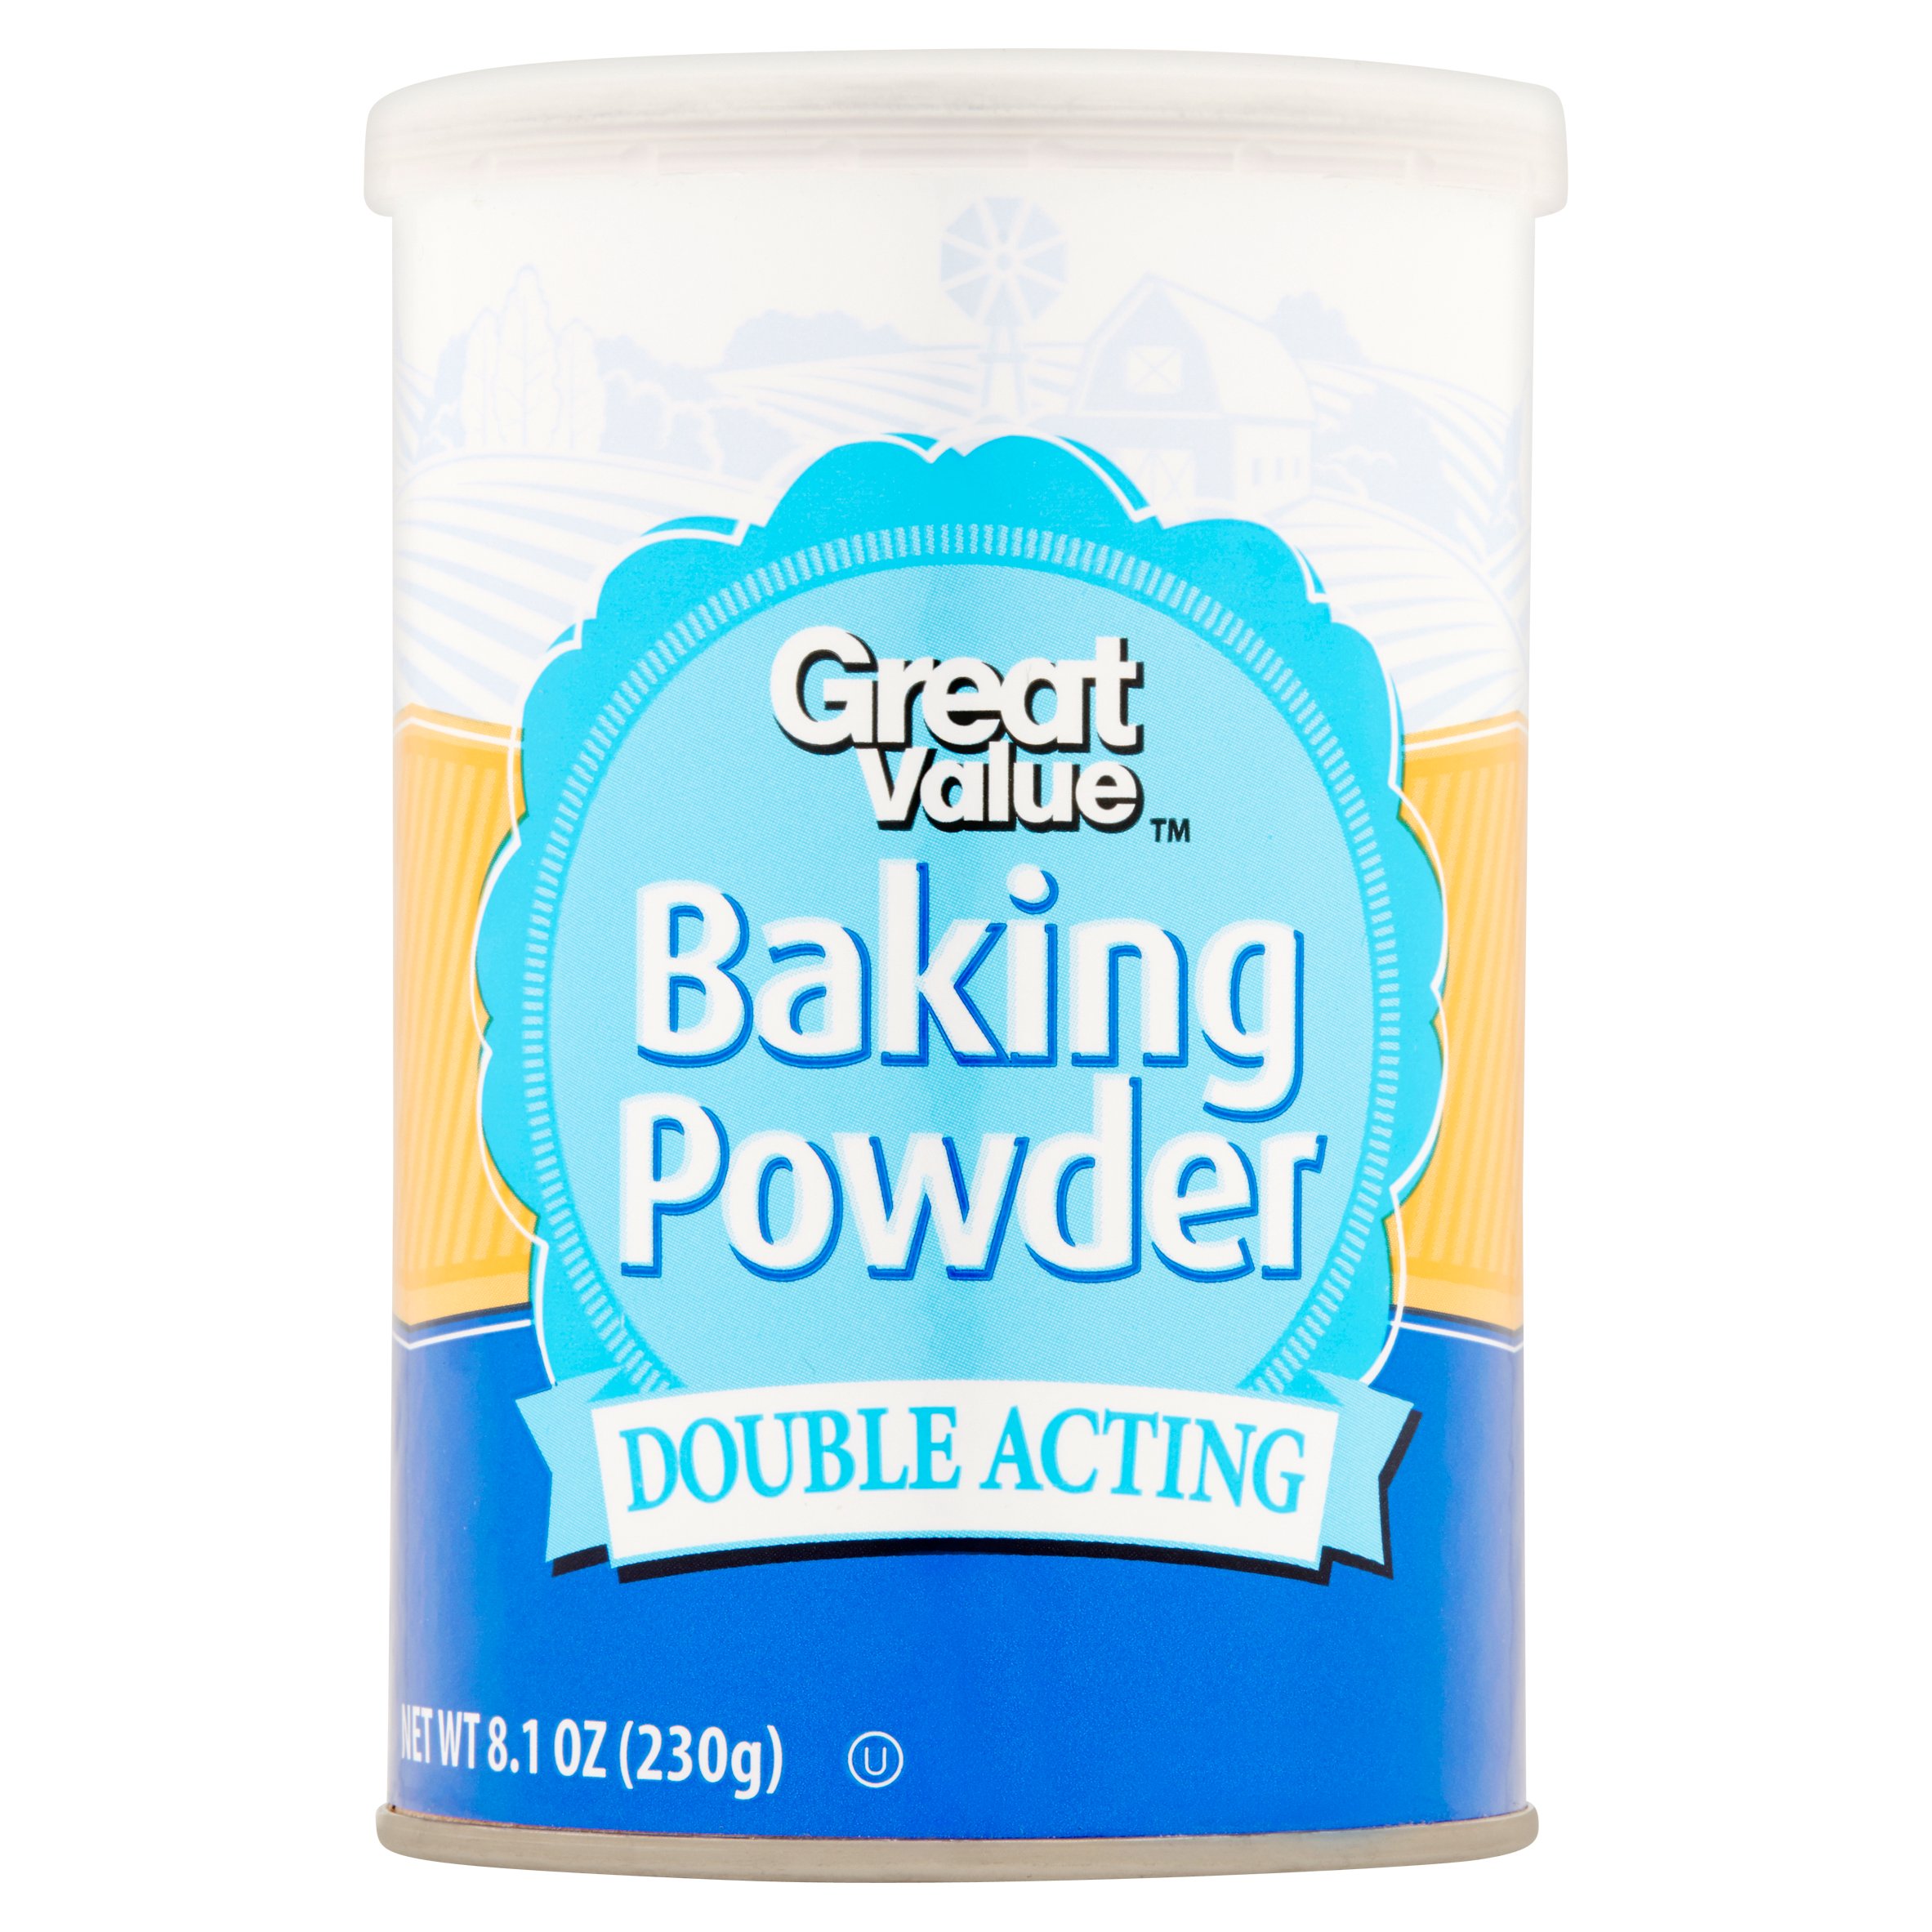 (5 Pack) Great Value Double Acting Baking Powder 8.1 Oz Image